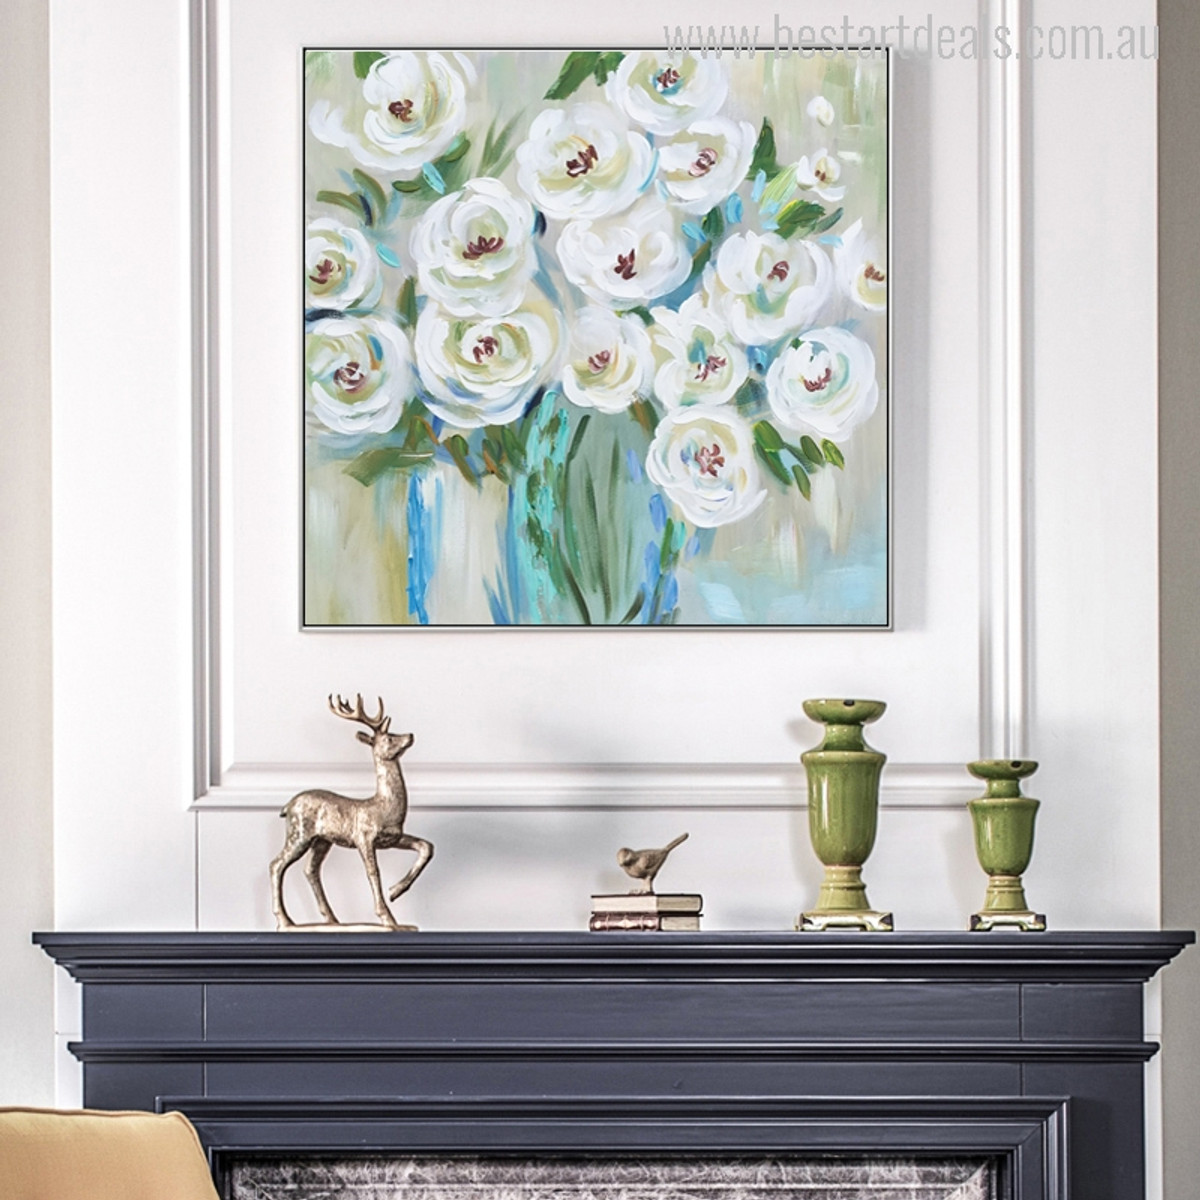 Buy White Rose Flowers Canvas Print Wall Art Decor.